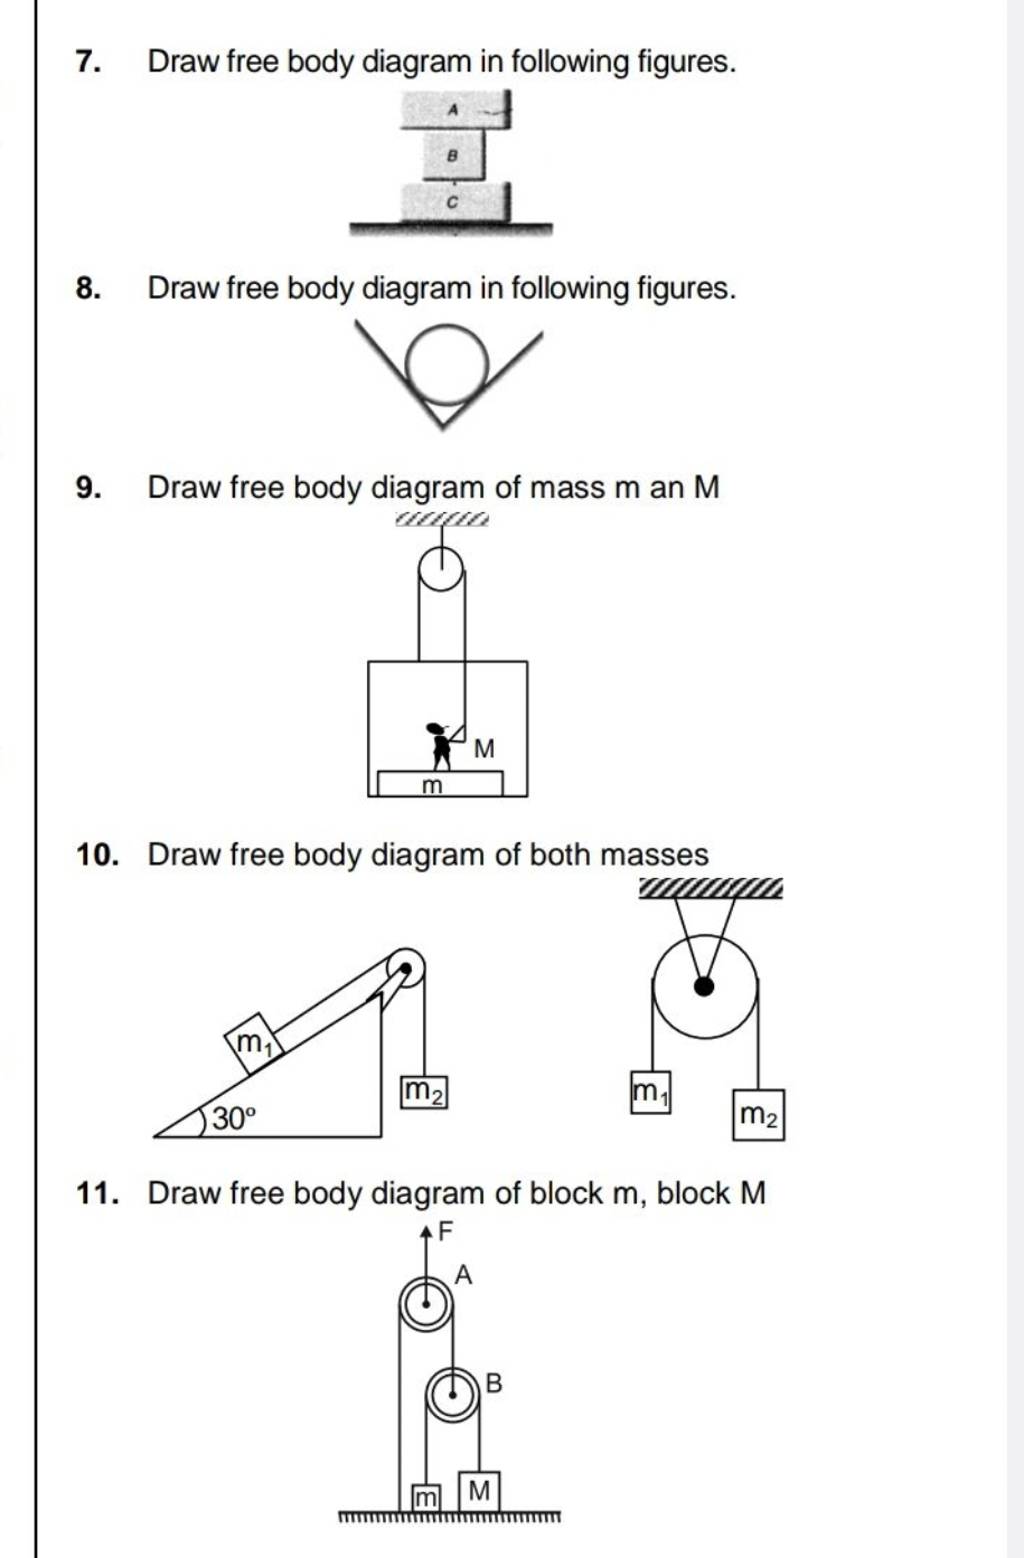 7. Draw free body diagram in following figures. Filo